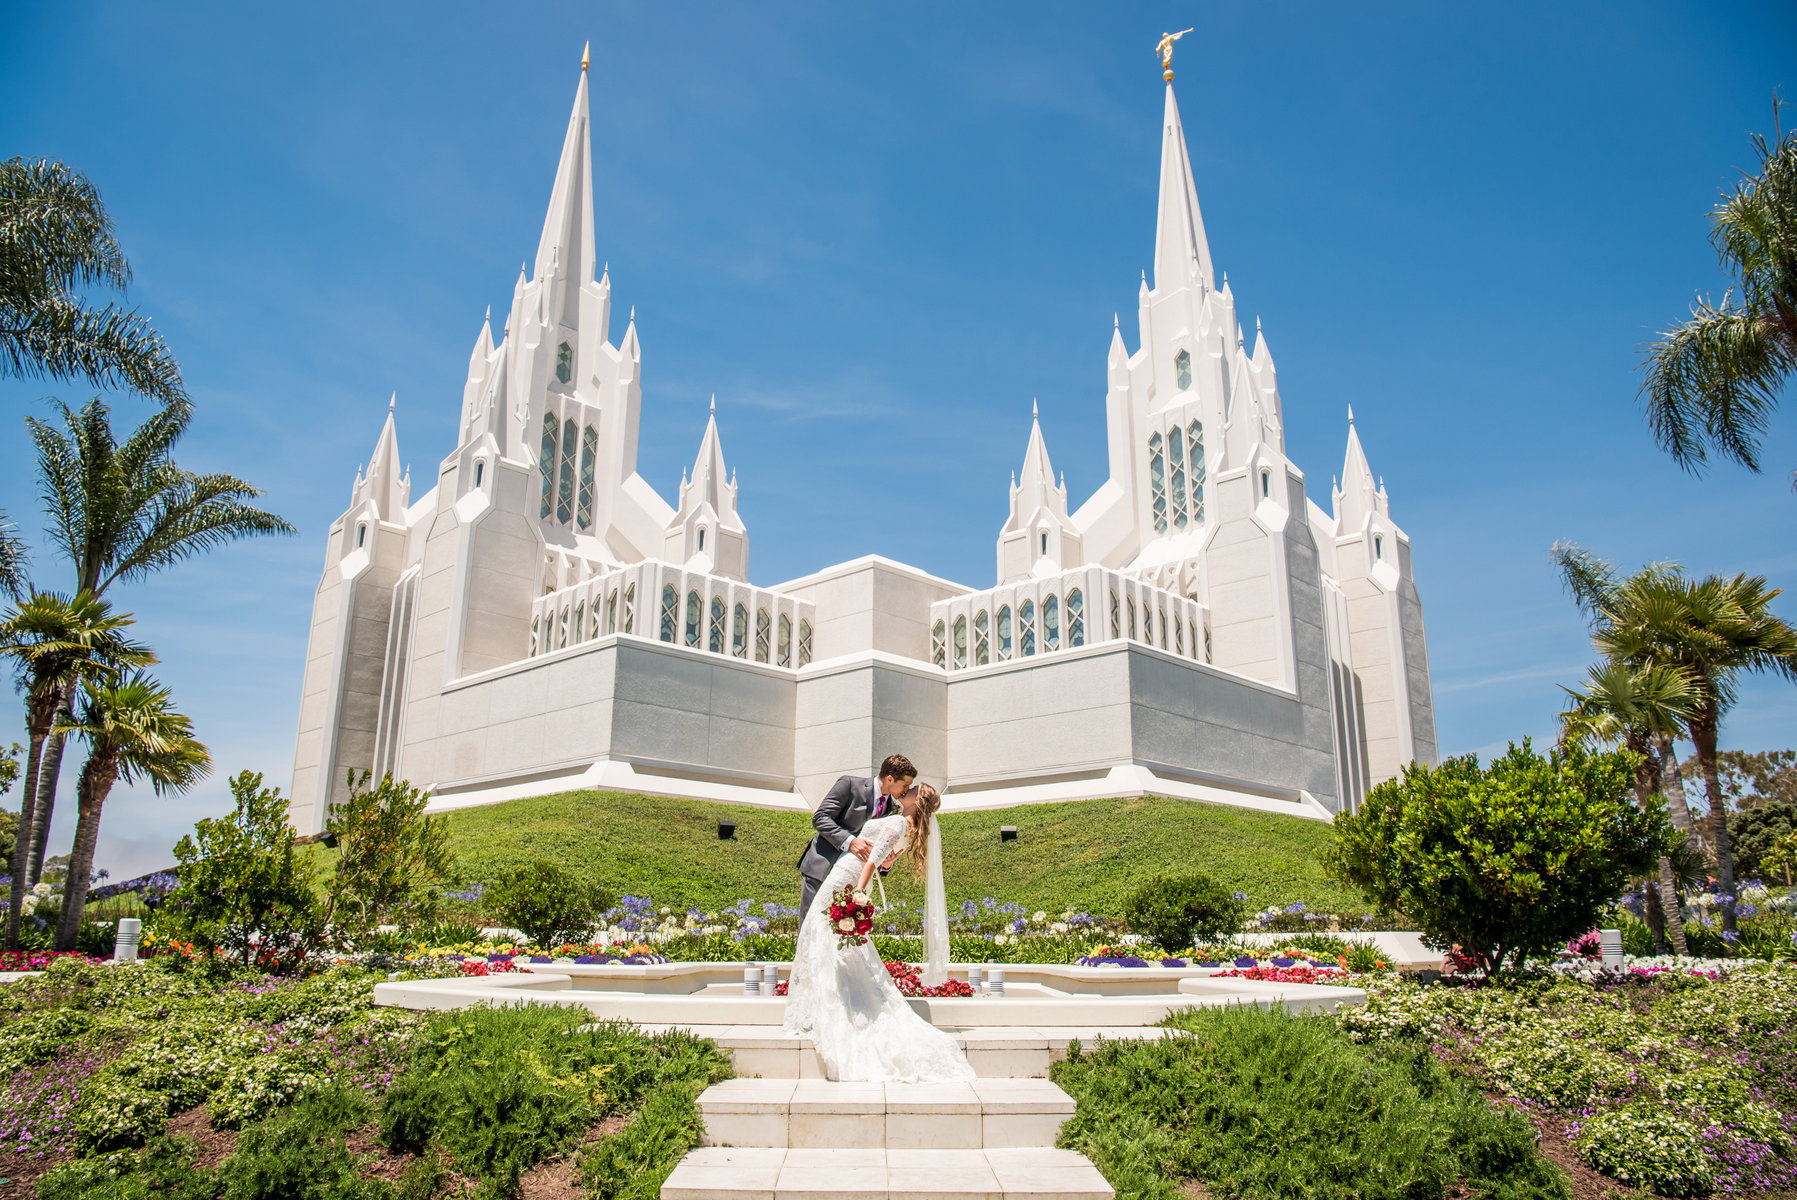 La Jolla Mormon Temple Photo Gallery, San Diego Church/Temple